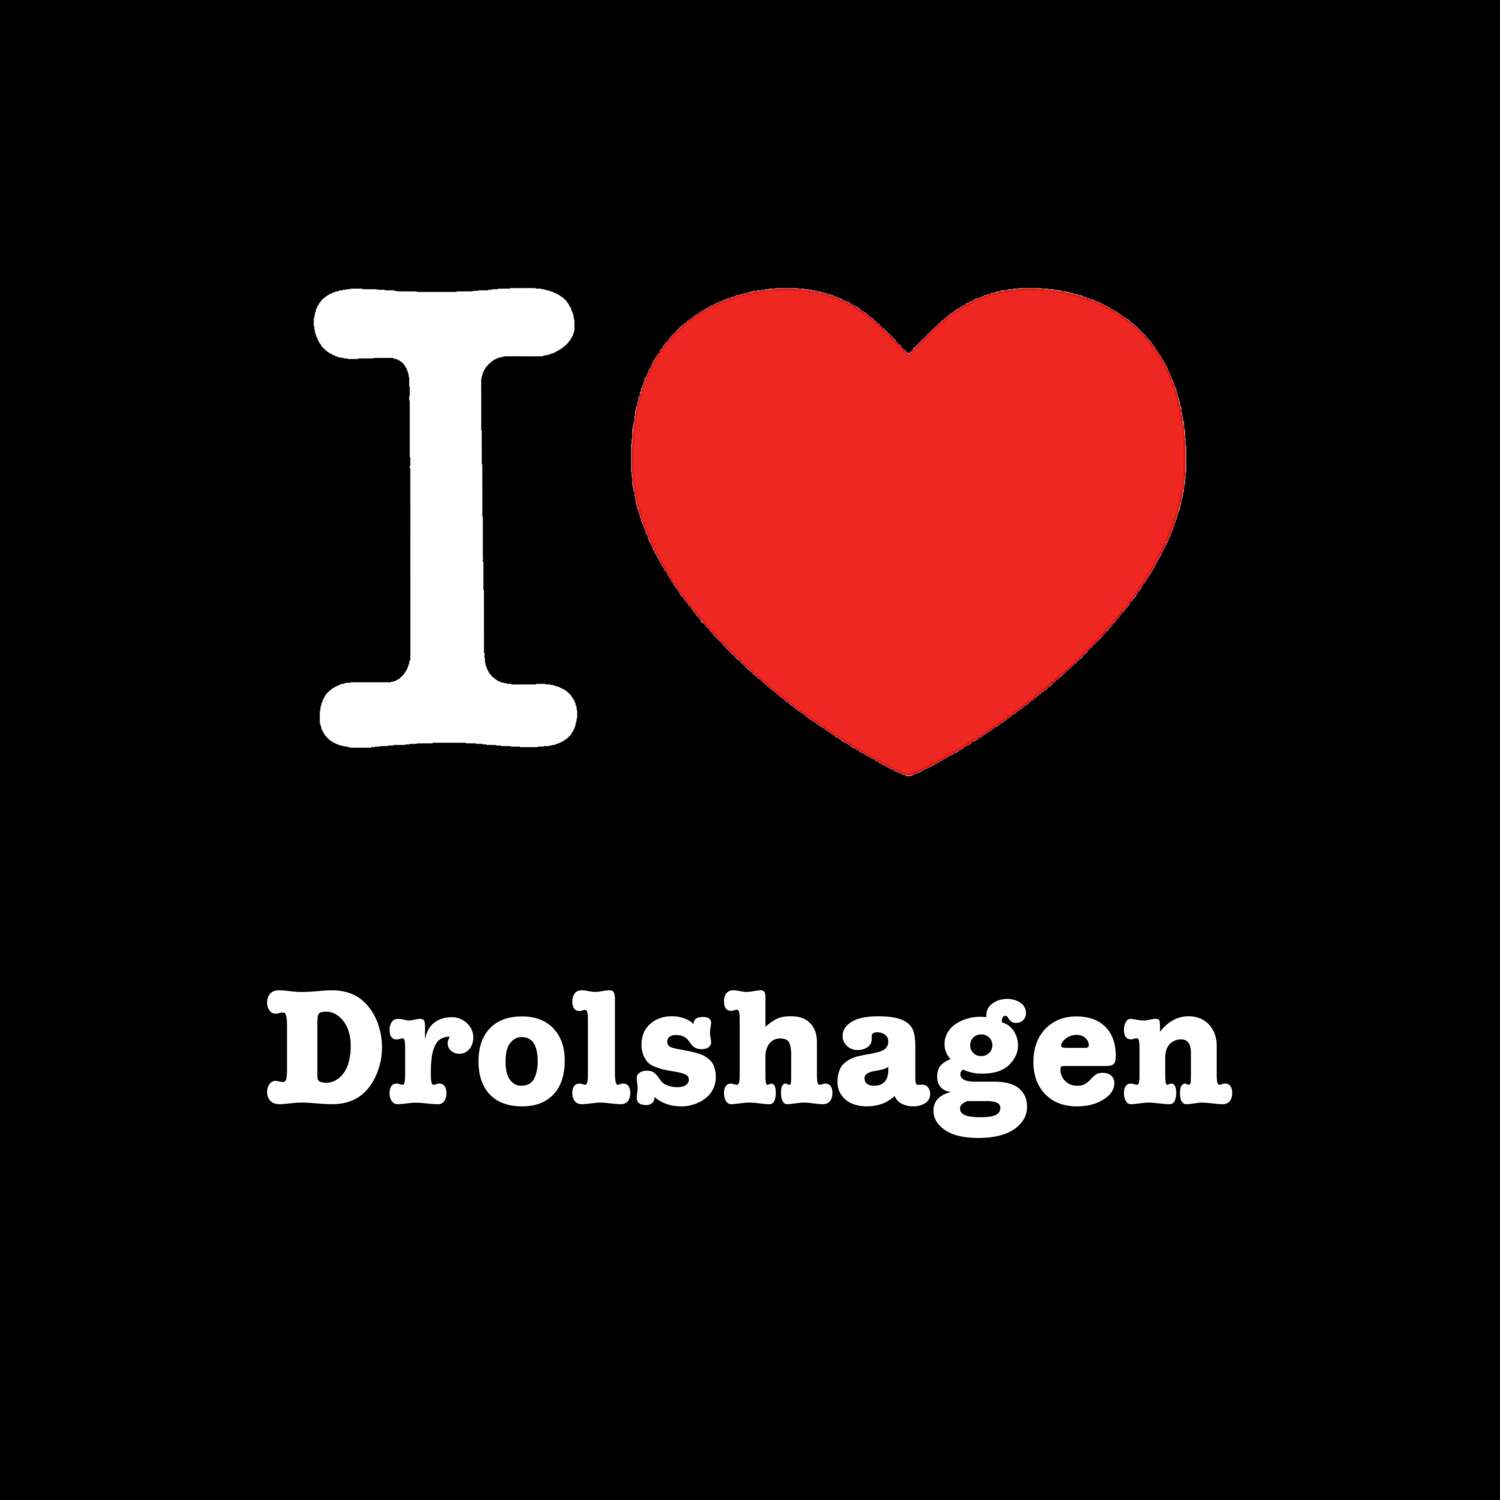 Drolshagen T-Shirt »I love«